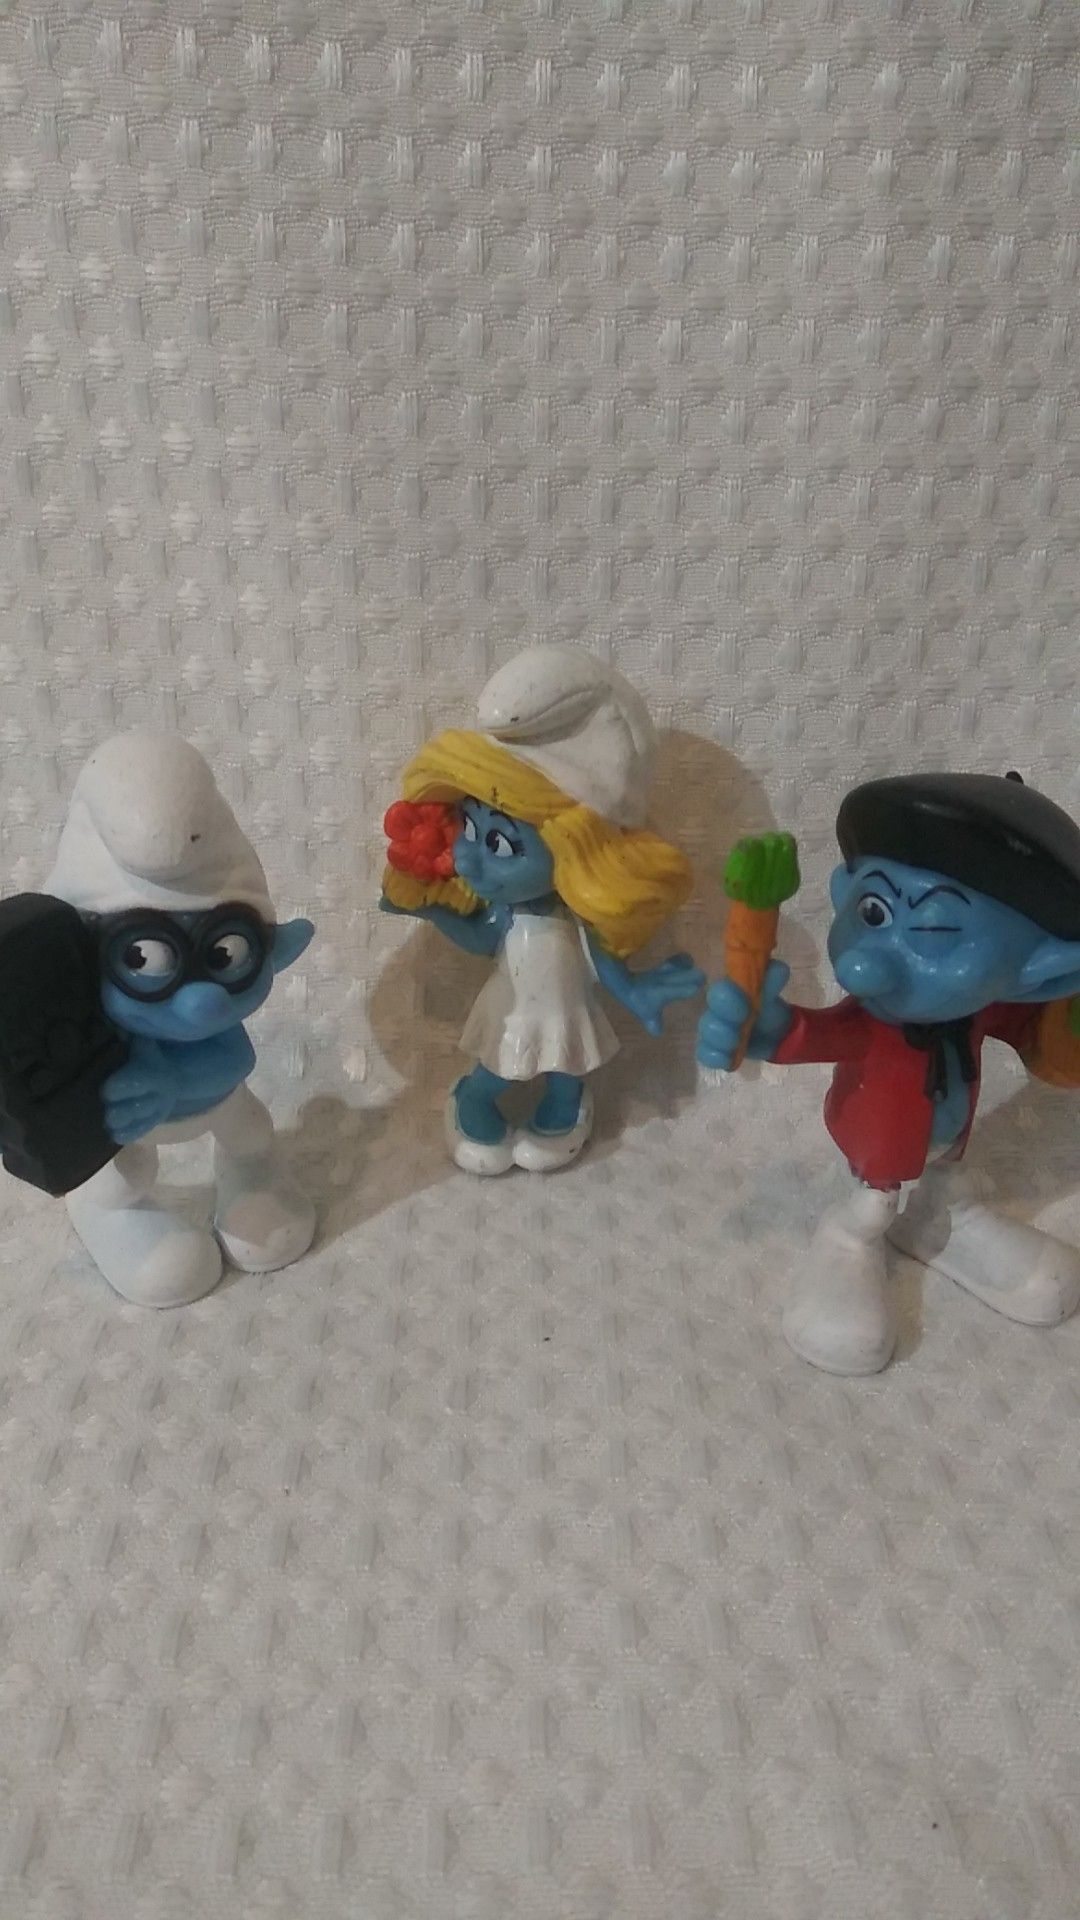 Smurfs figures